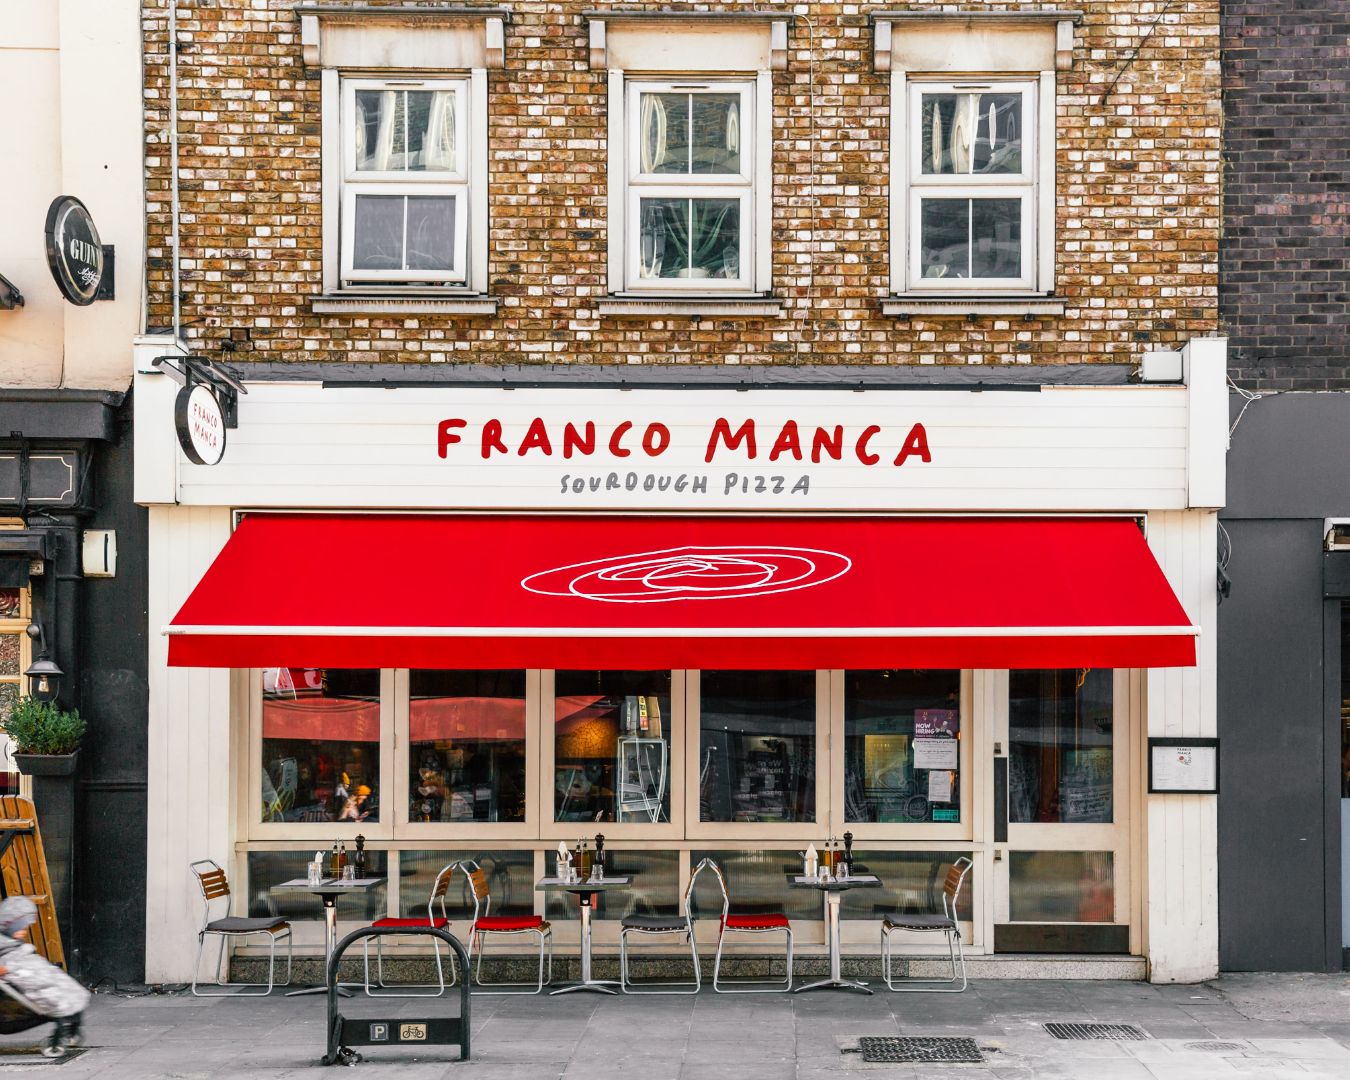 Franco Manca pizzeria in Stoke Newington